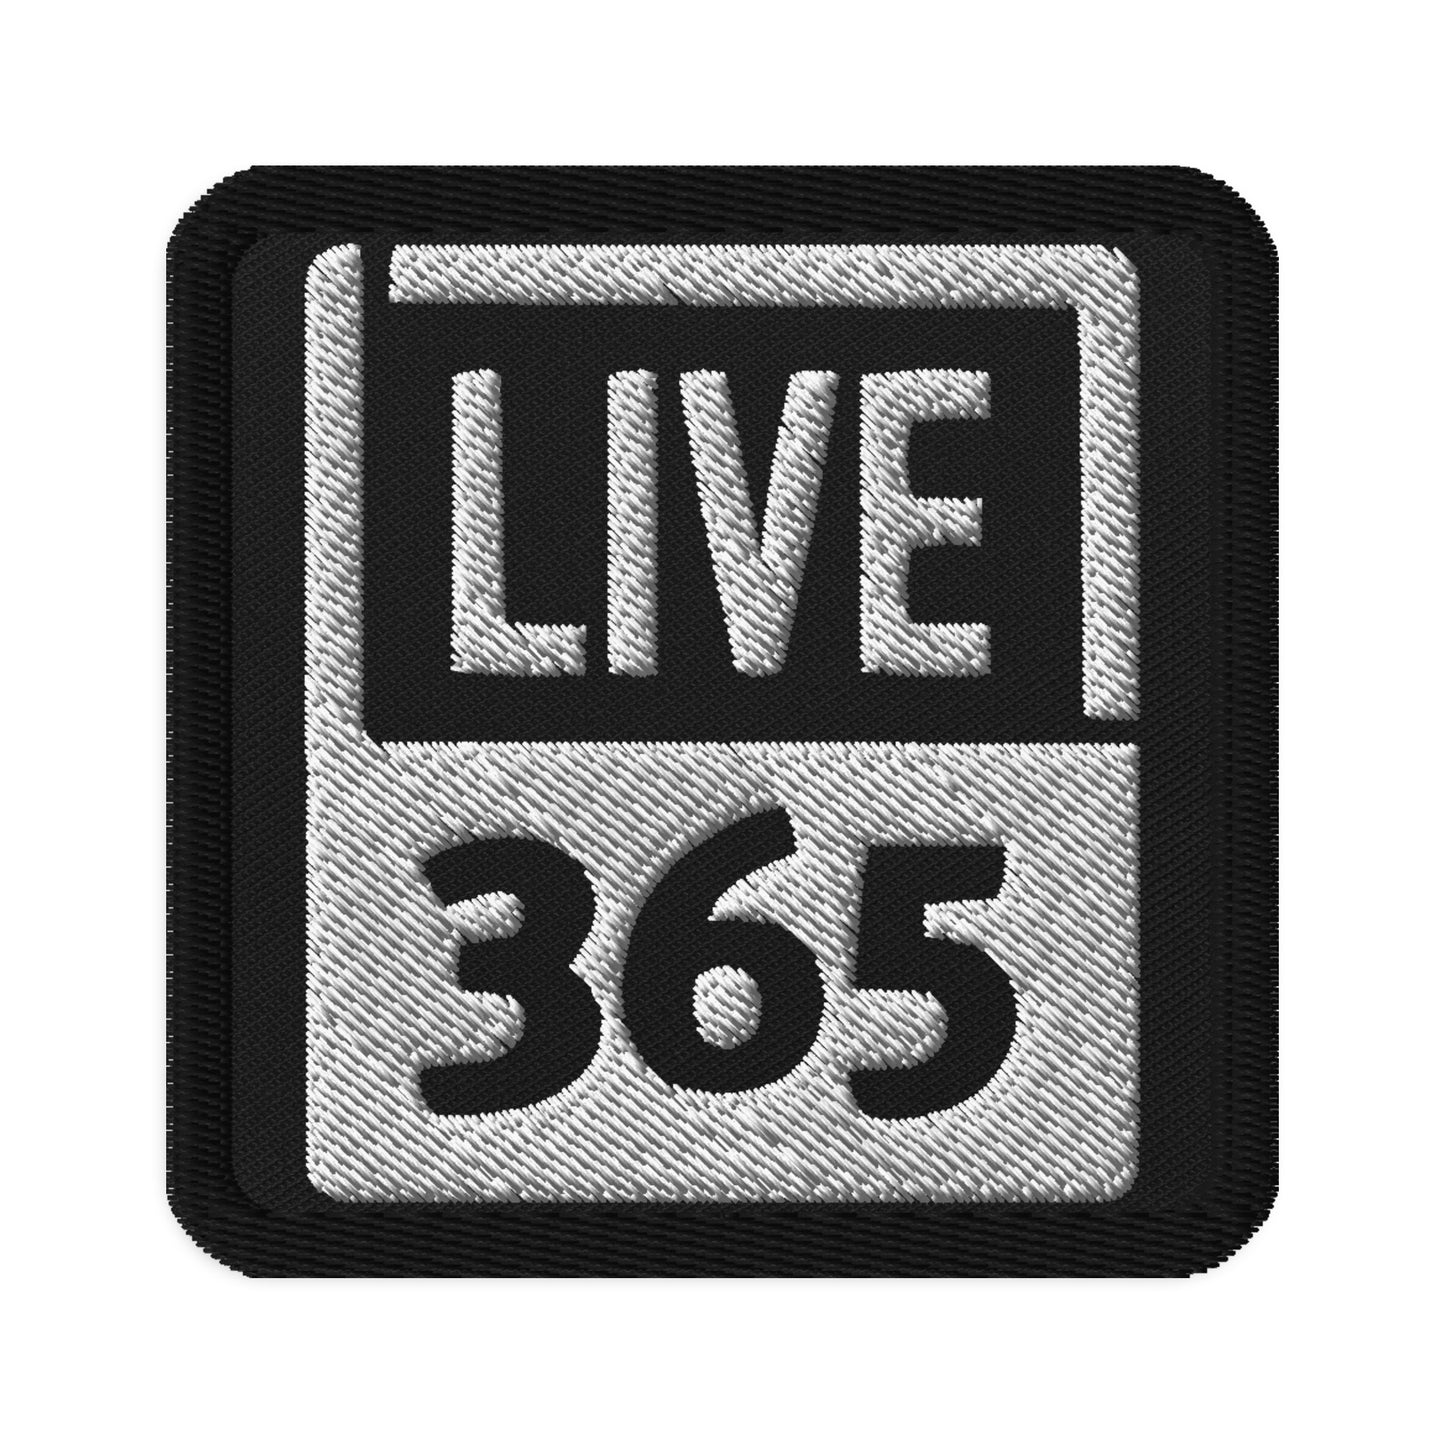 Live365 Square Patch